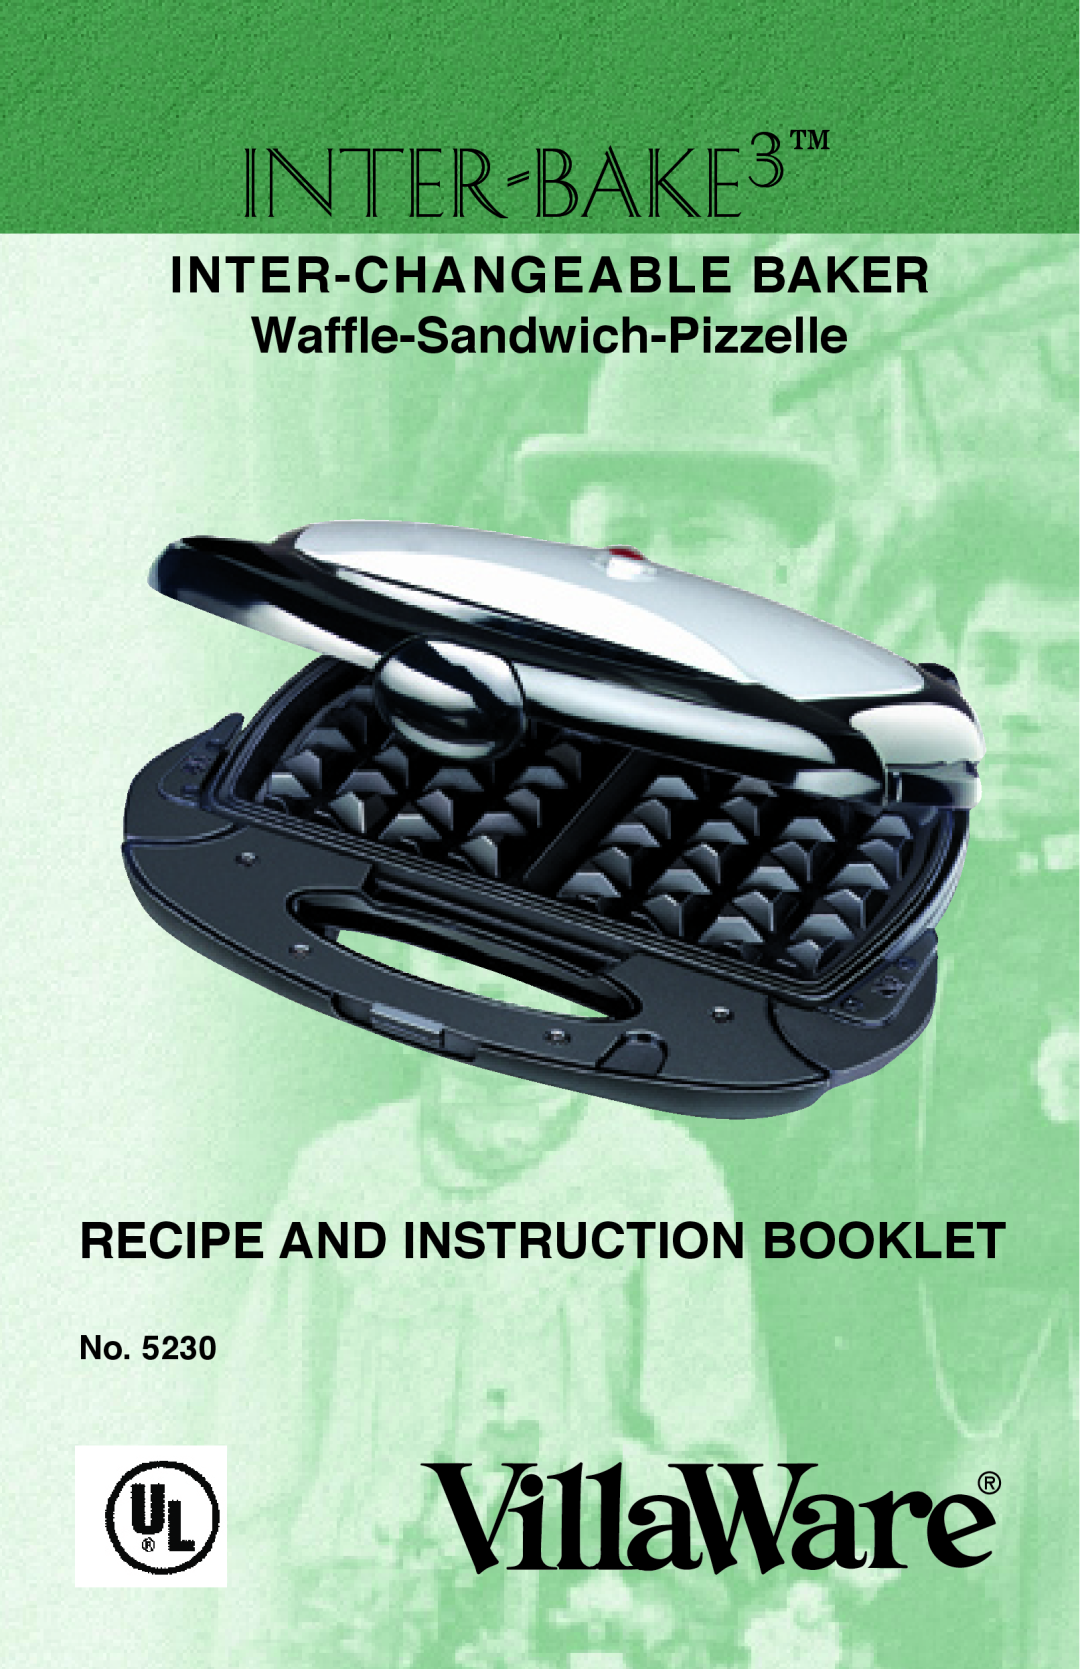 Villaware 5230 manual INTER-CHANGEABLEBAKER Waffle-Sandwich-Pizzelle, Recipe And Instruction Booklet, inter-bakE3 